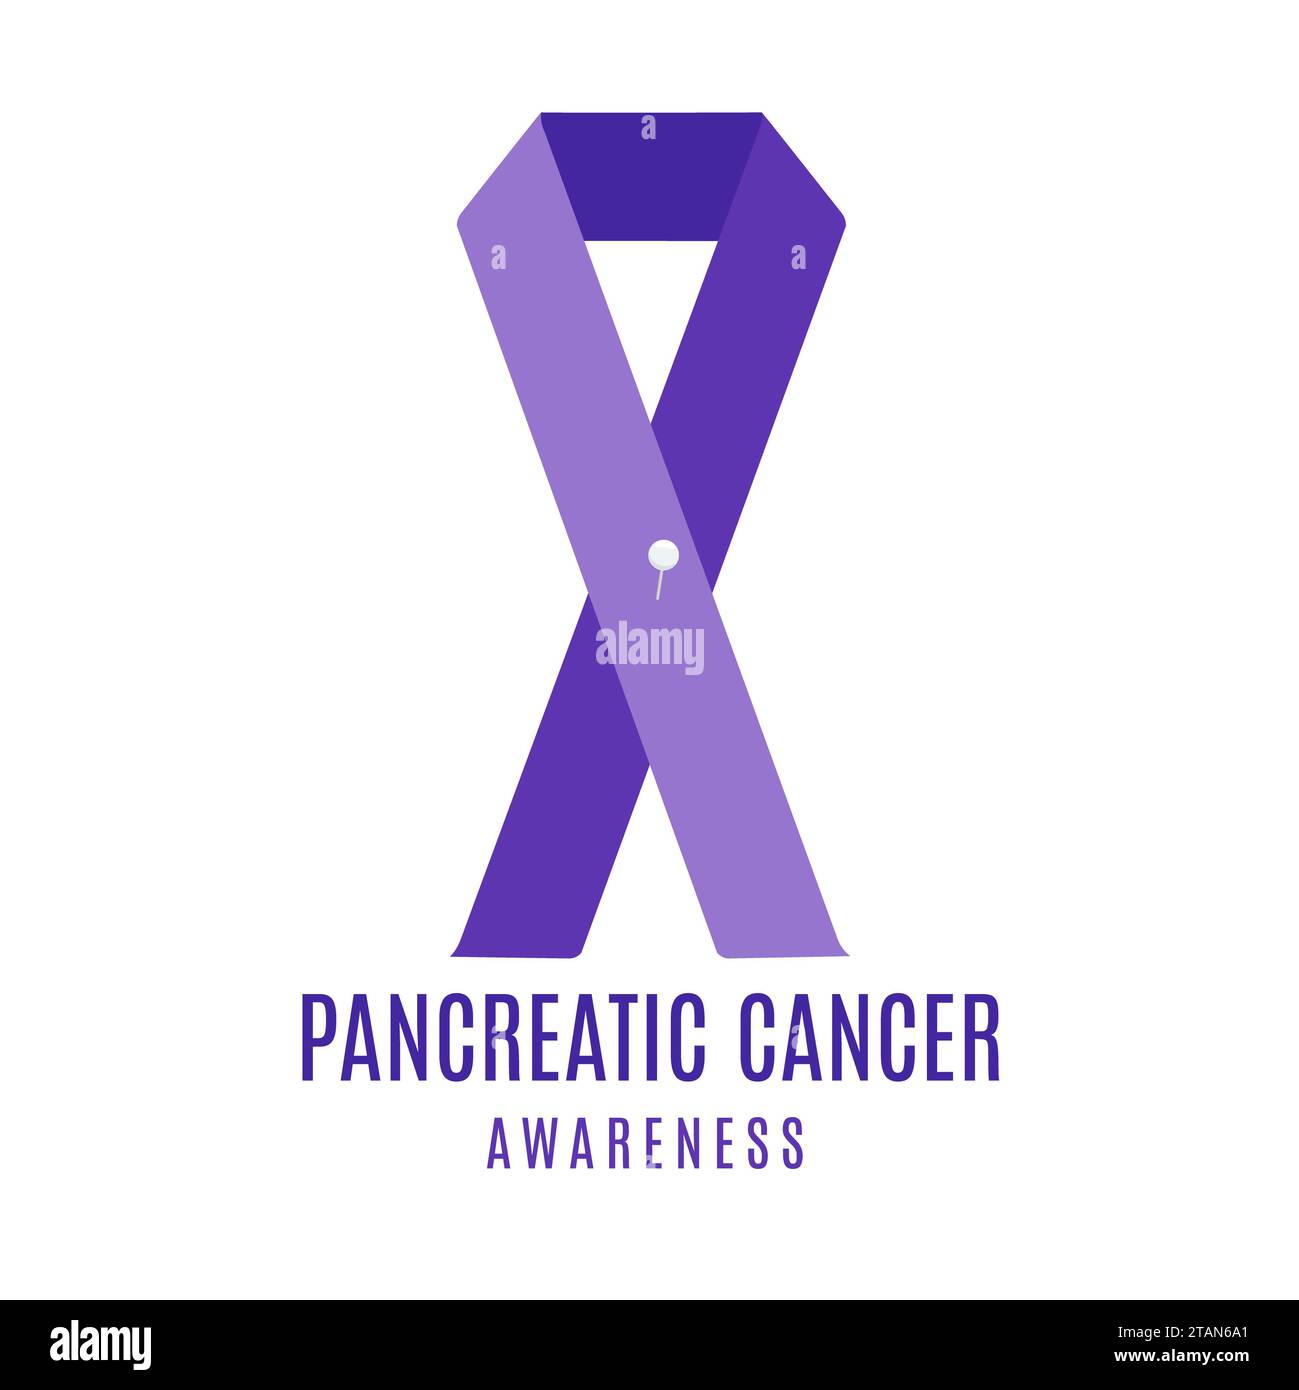 Pancreatic cancer, conceptual illustration Stock Photo